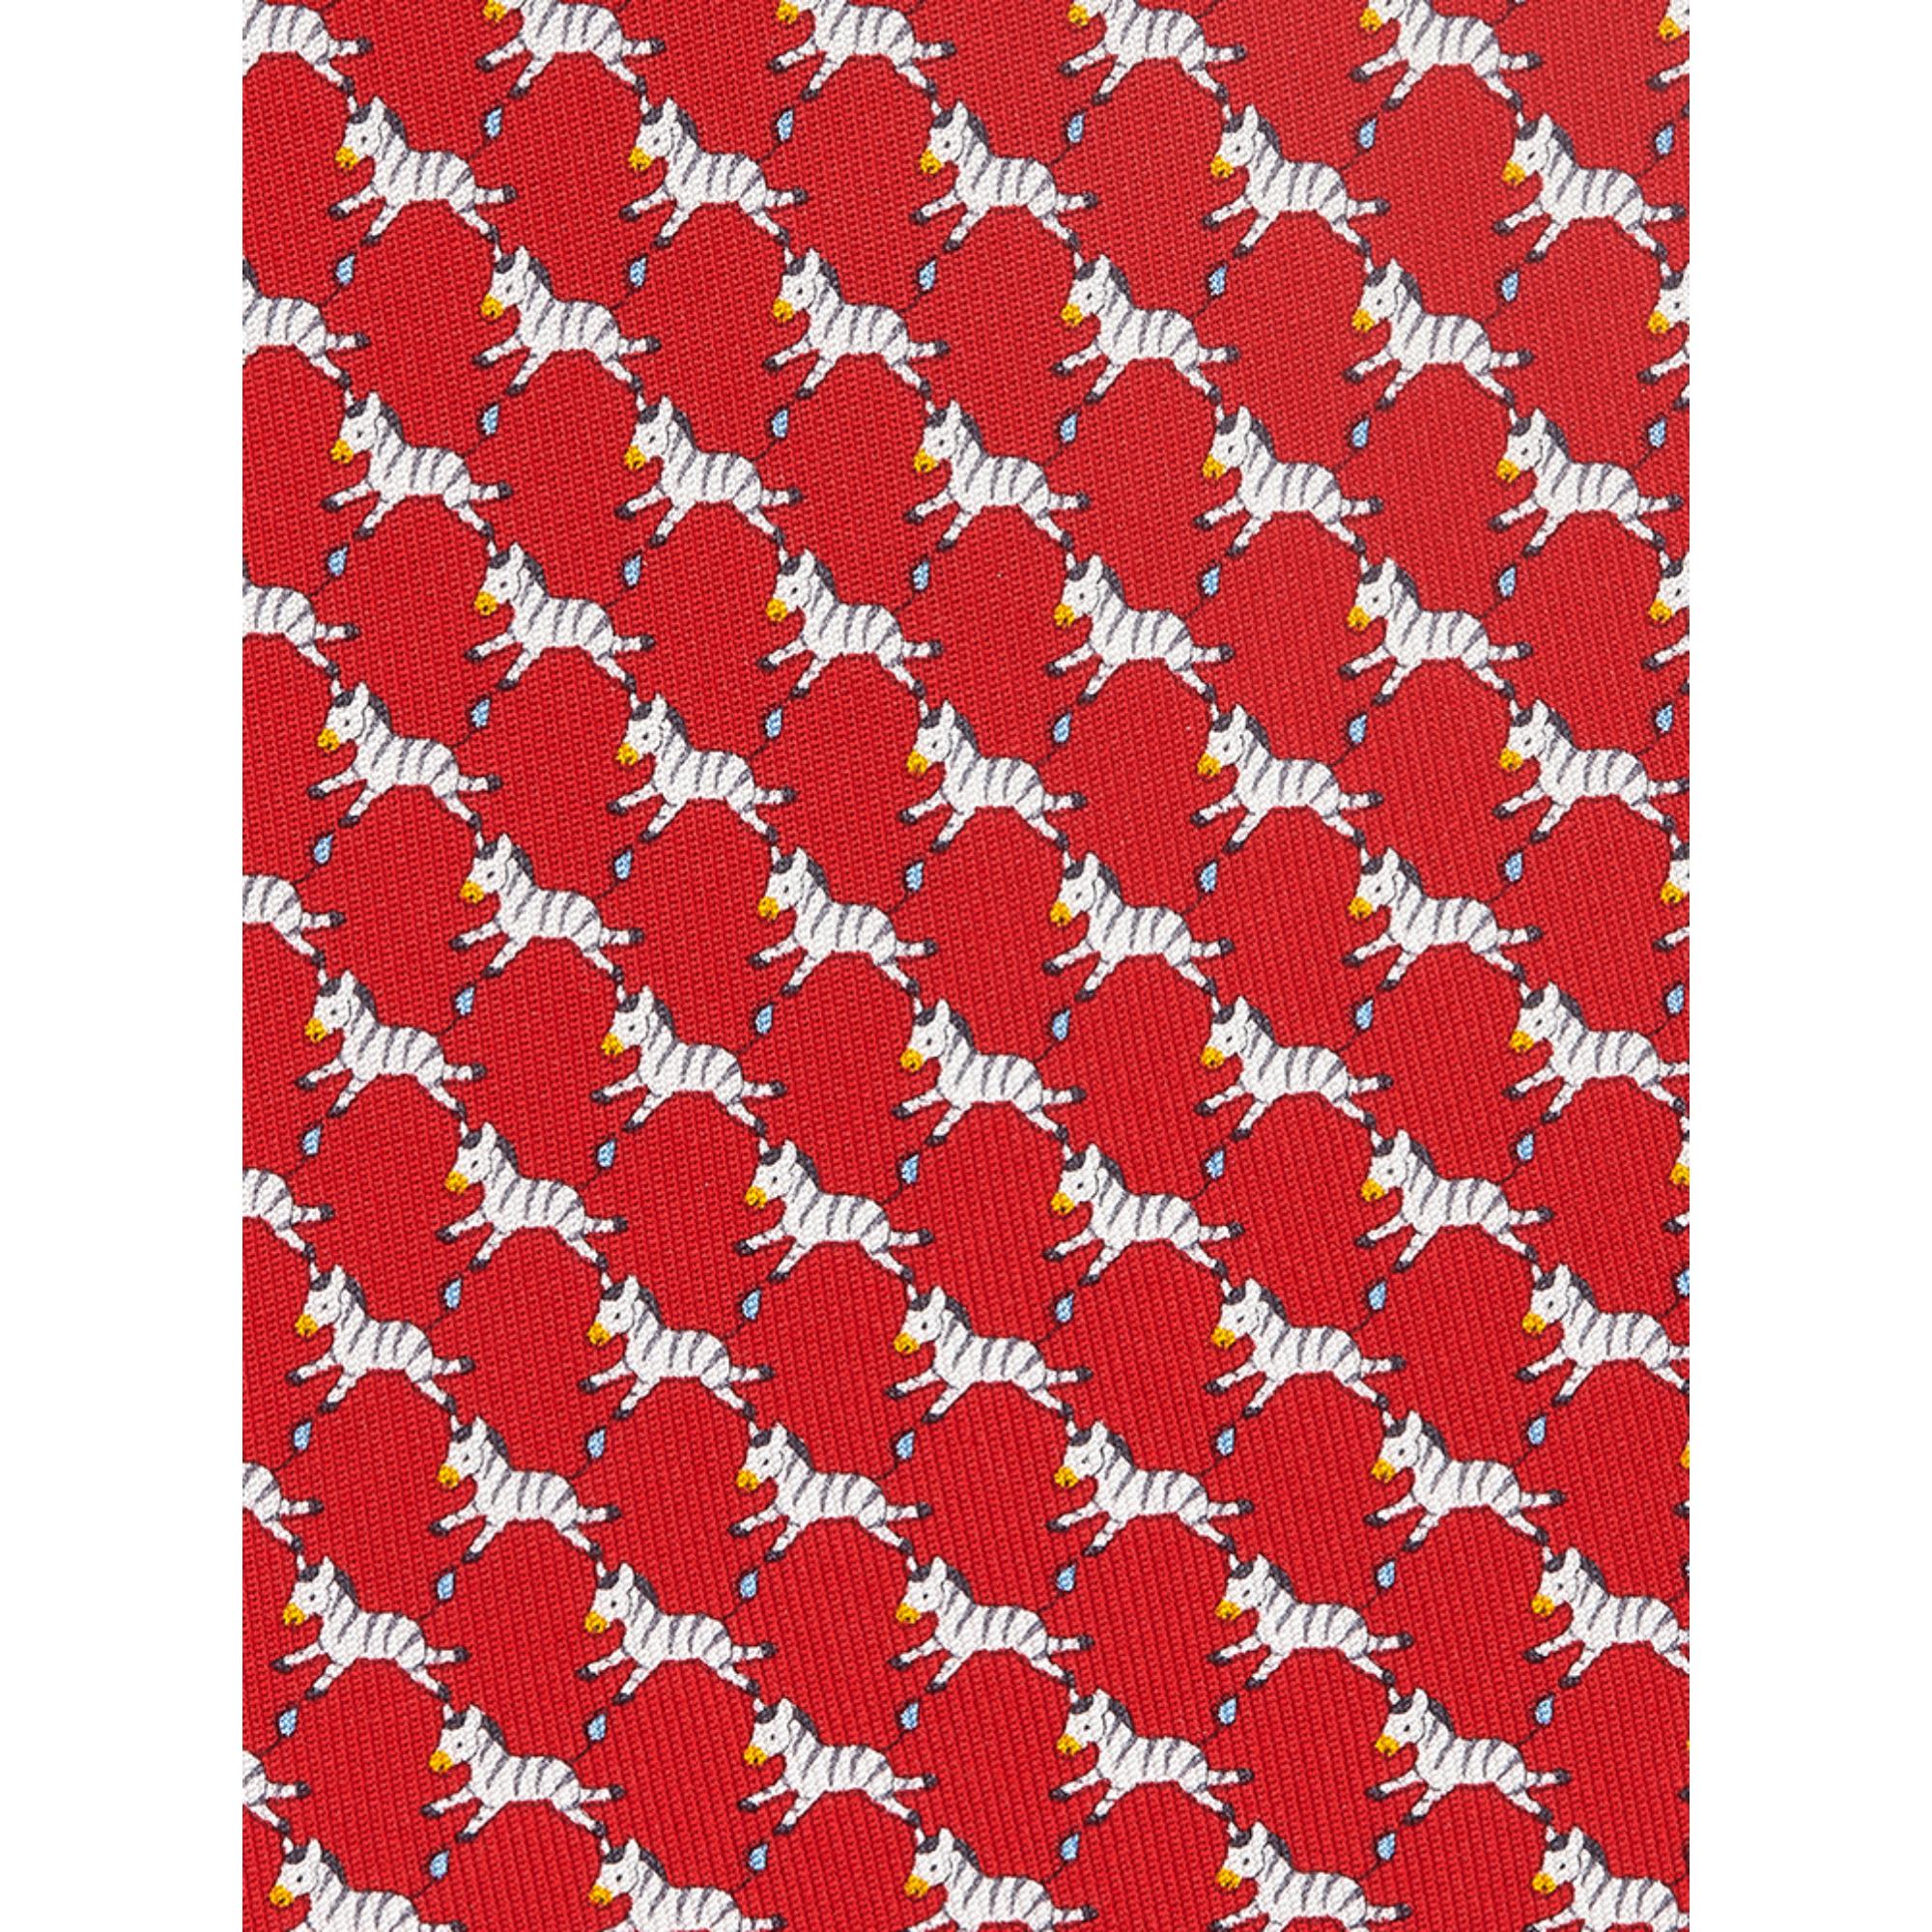 Zebra Print Silk Tie - Red